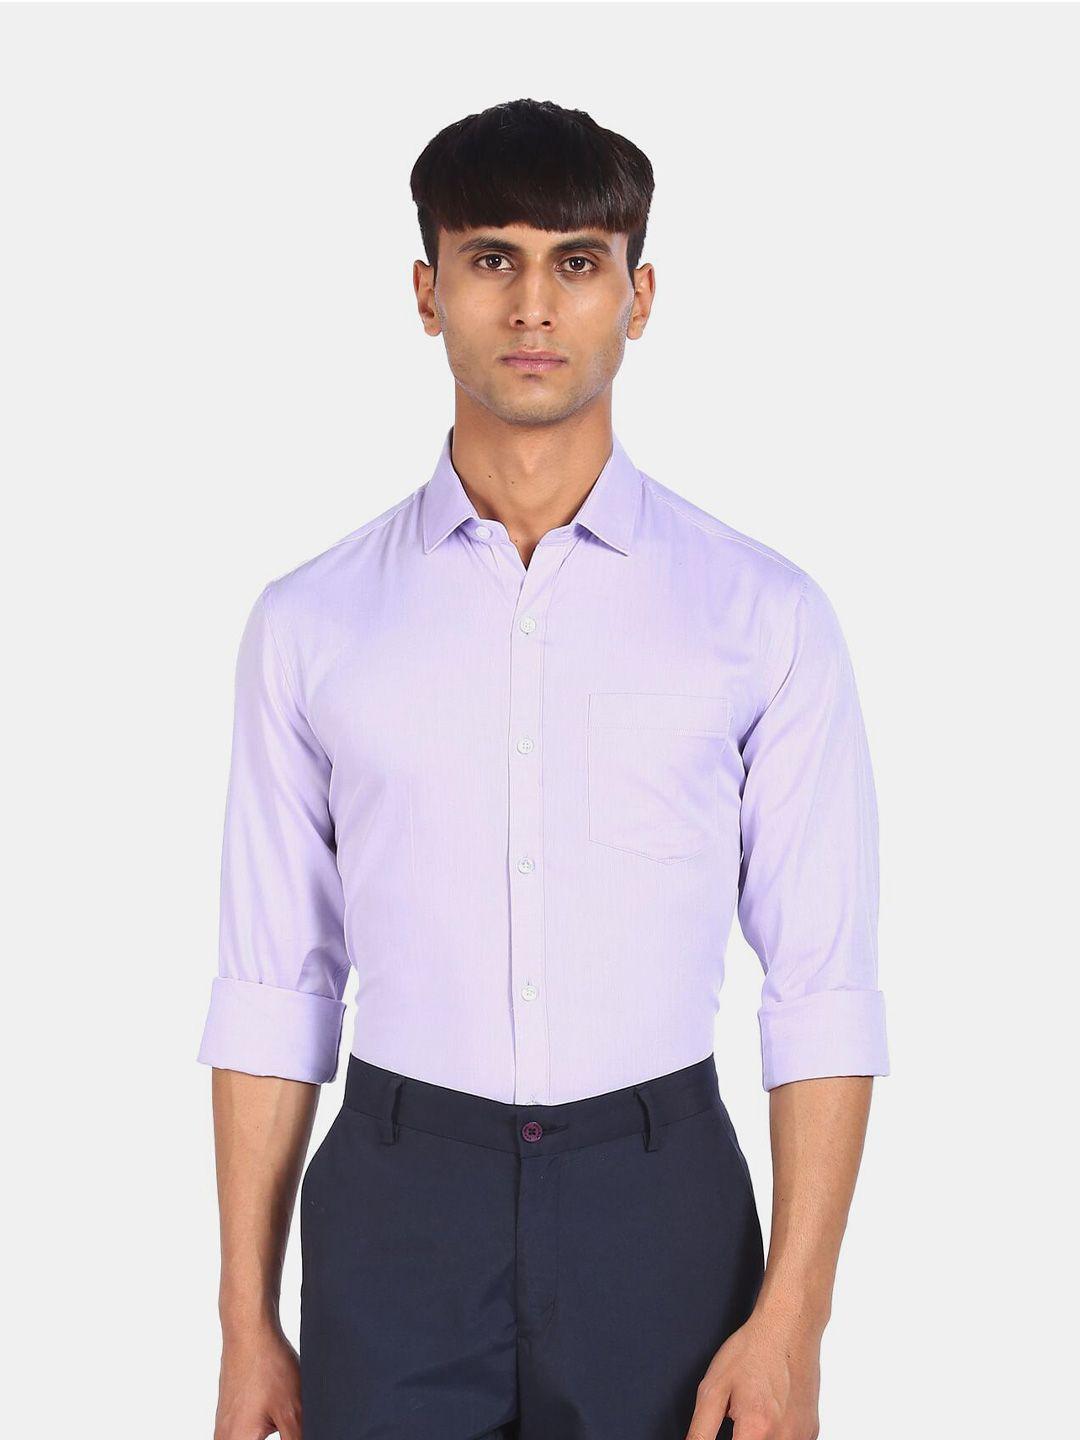 excalibur-men-lavender-solid-pure-cotton-regular-fit-formal-shirt